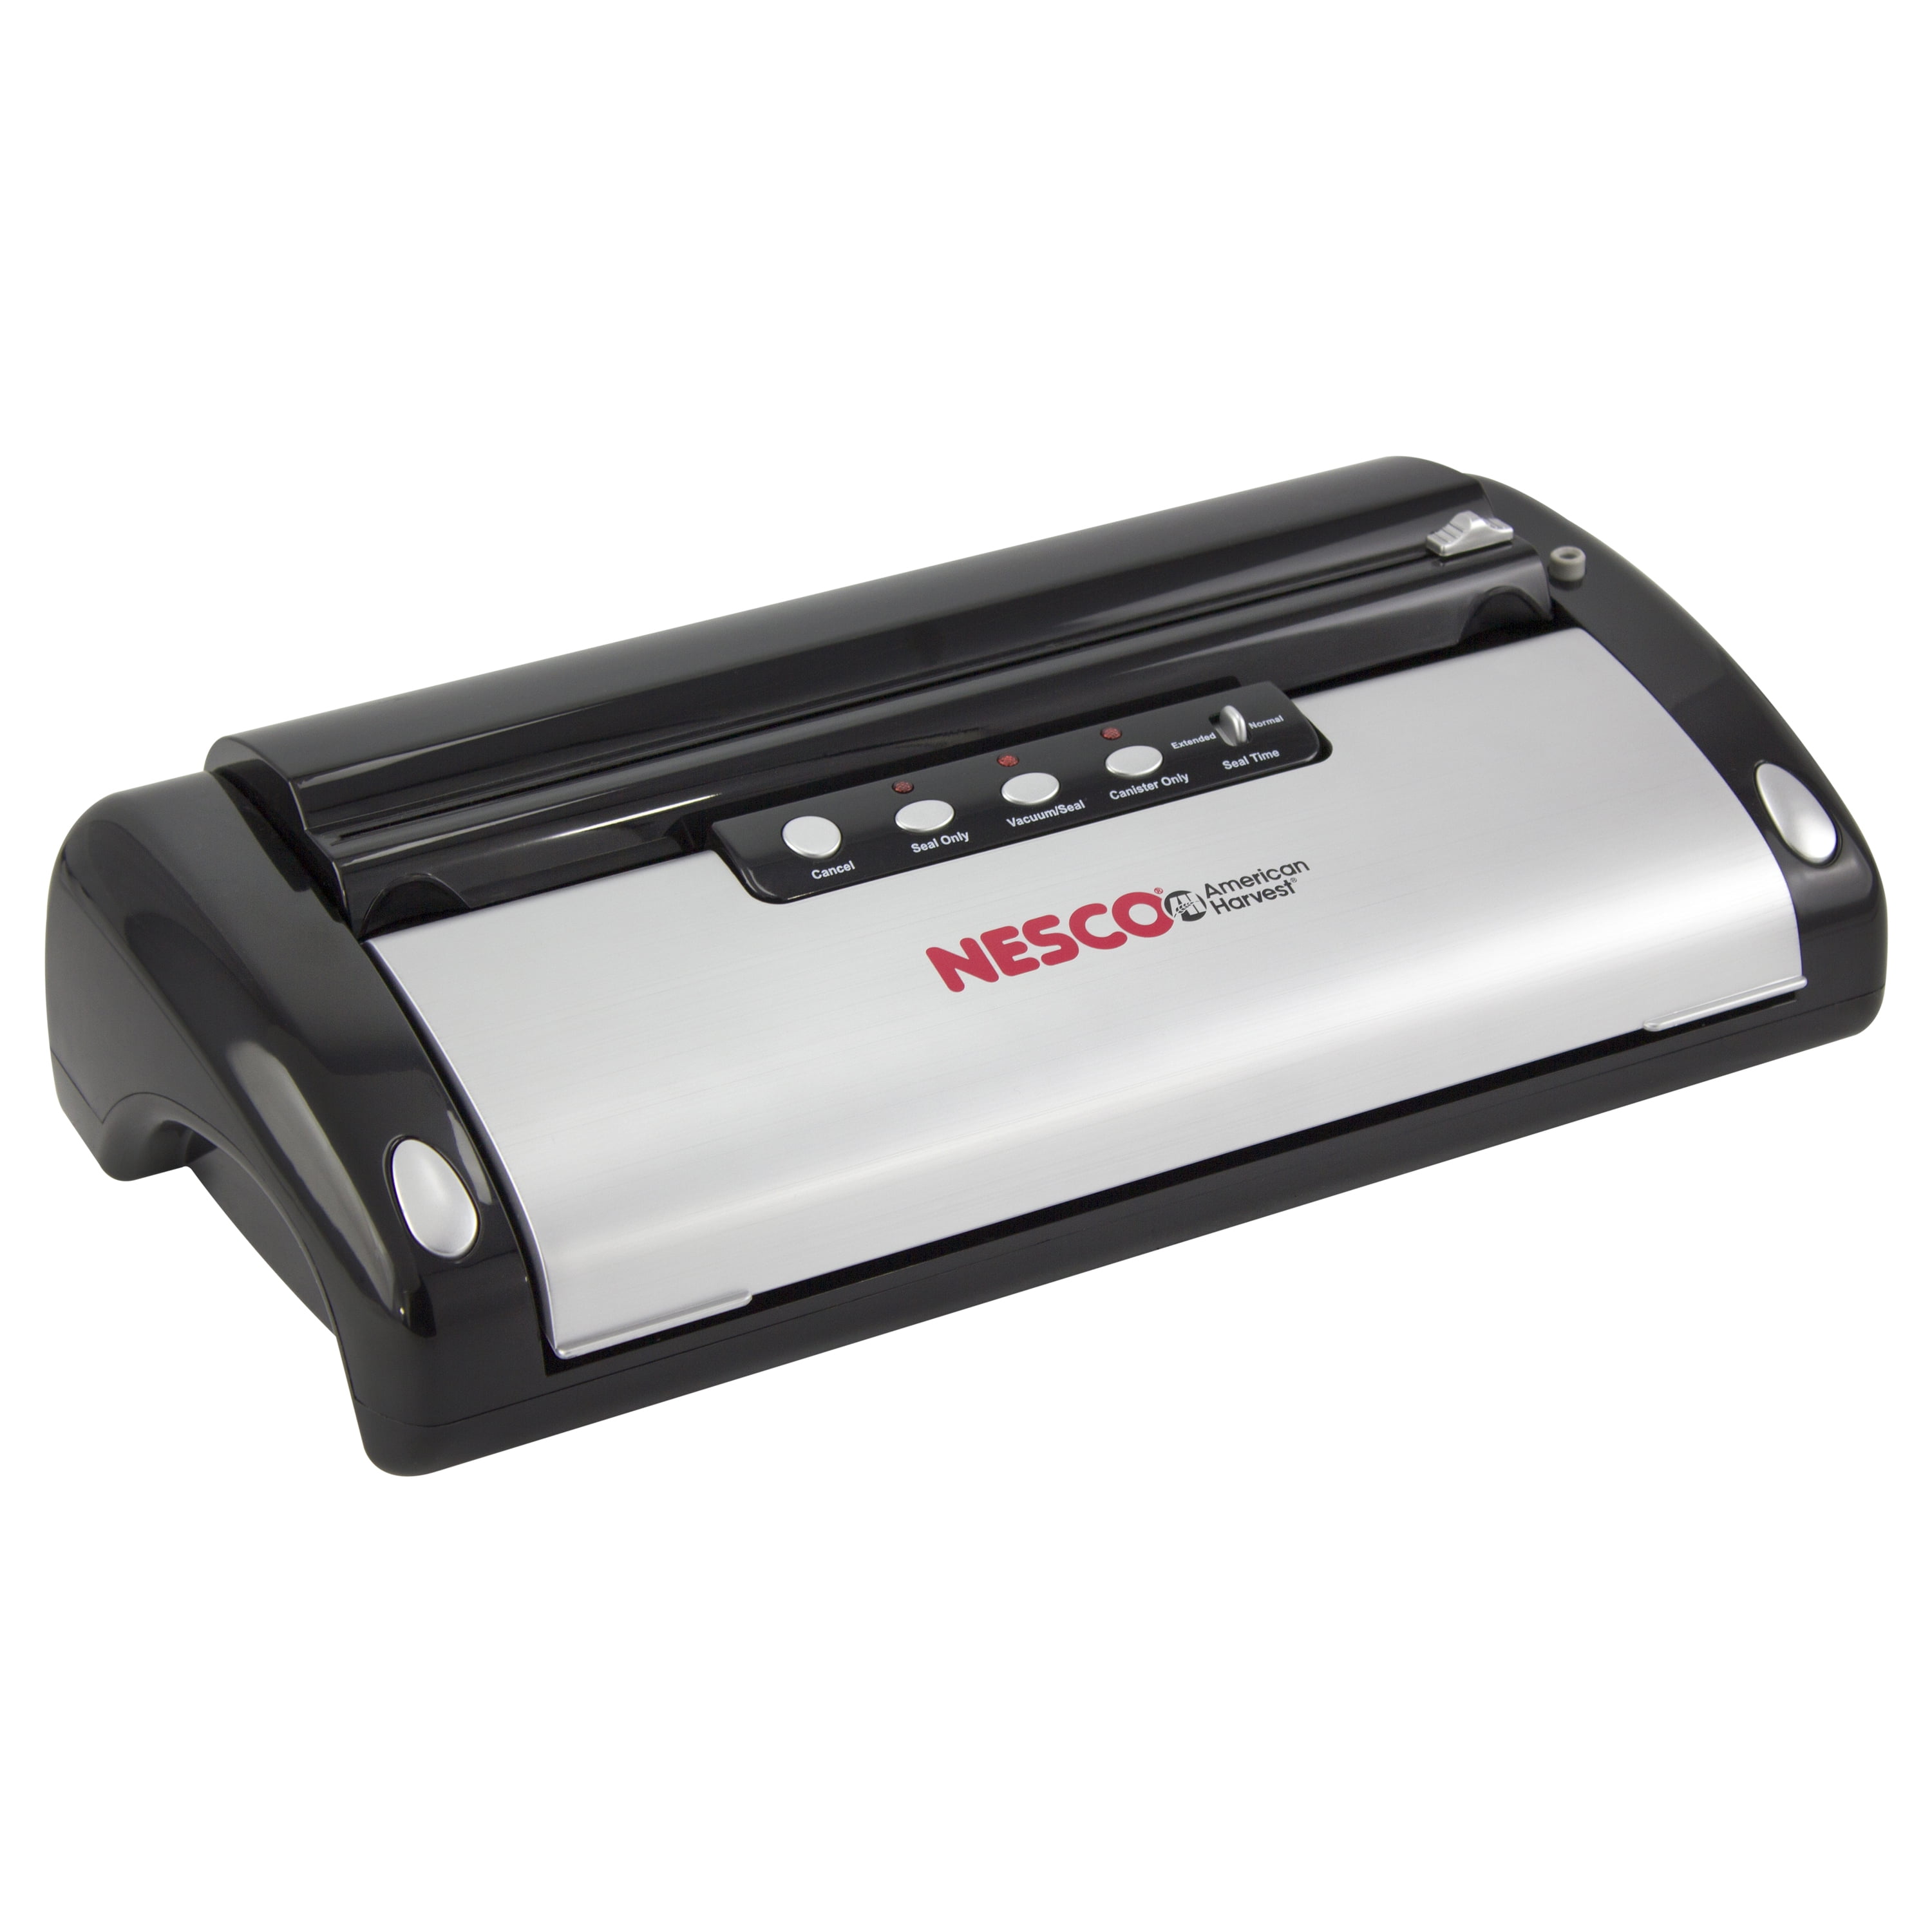 NESCO Deluxe Vacuum Sealer Unboxing And Review 